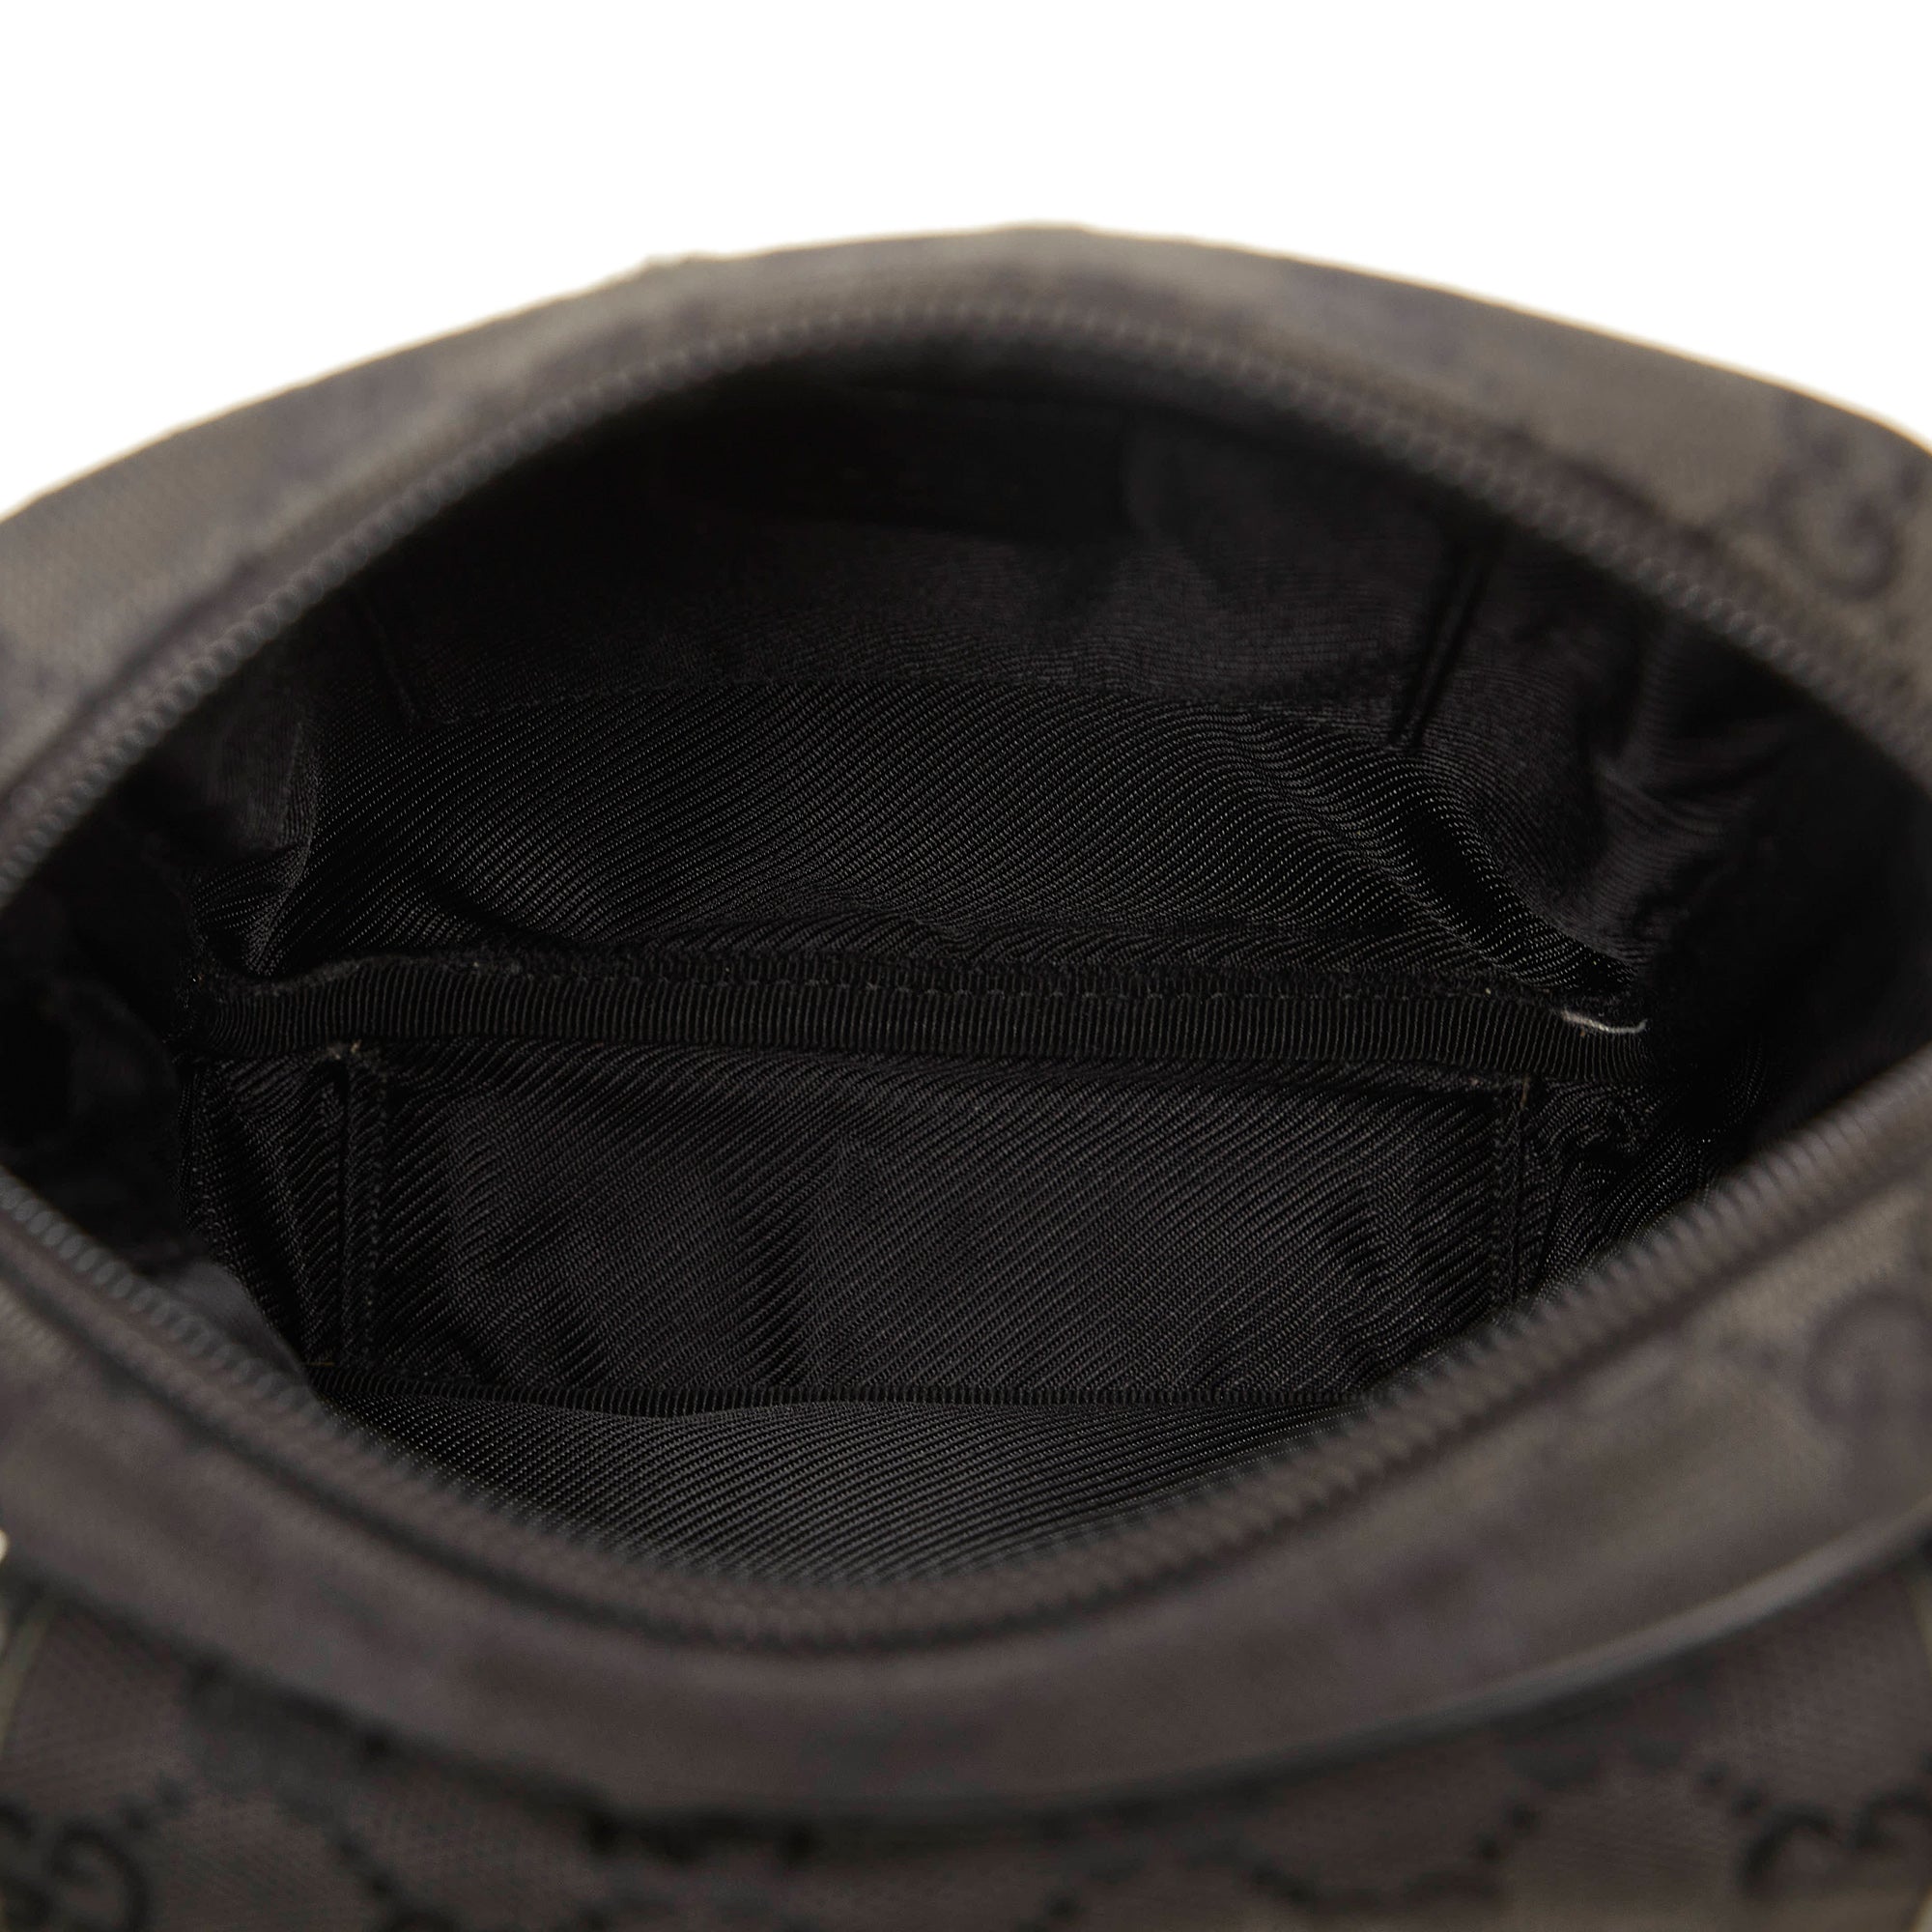 Authenticated Used Gucci Body Bag Black Silver GG Nylon 449182